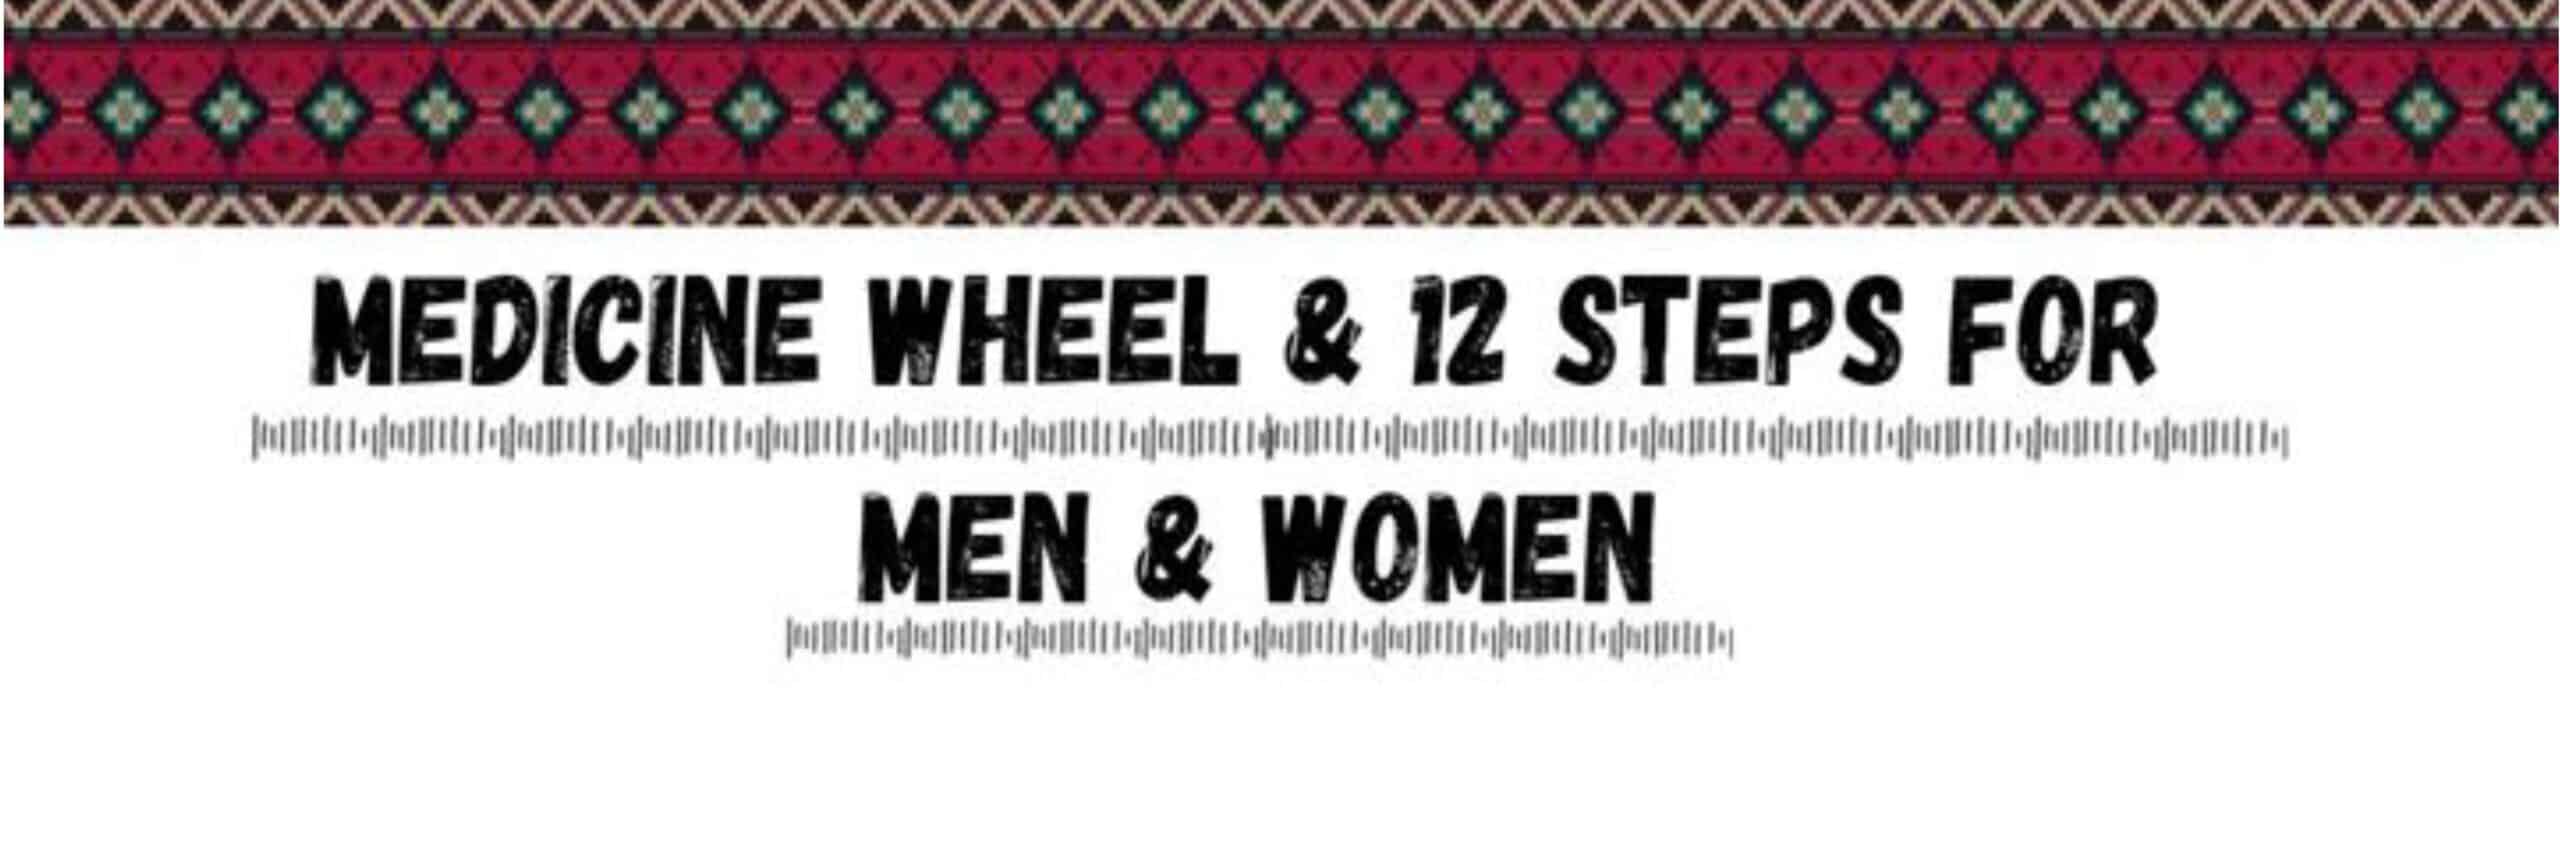 Medicine Wheel & 12 Steps for Men and Women (June 3-5, 2022)